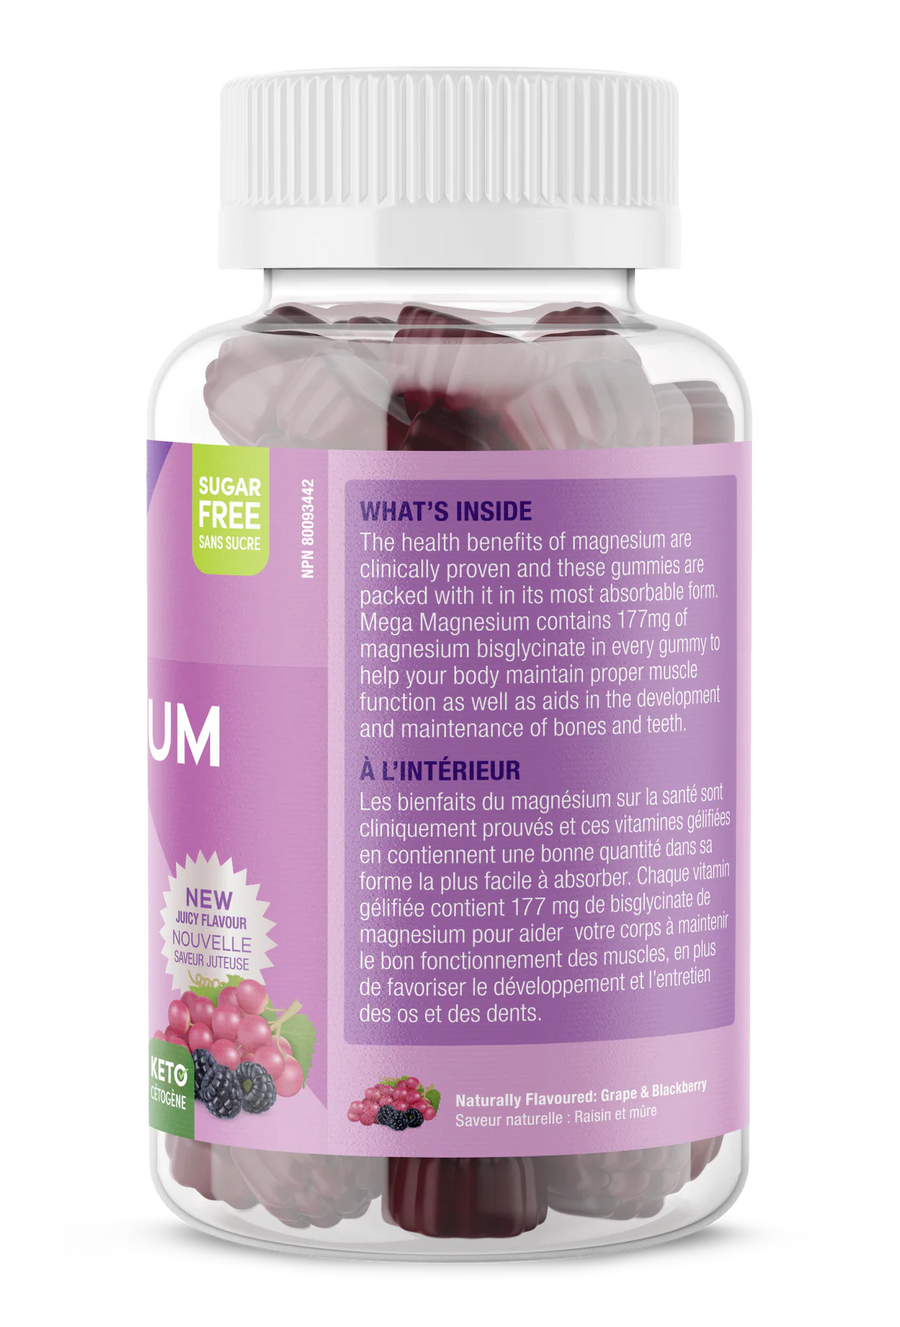 Suku Vitamins Mega Magnesium Grape & Blackberry Flavour 60 Gummies